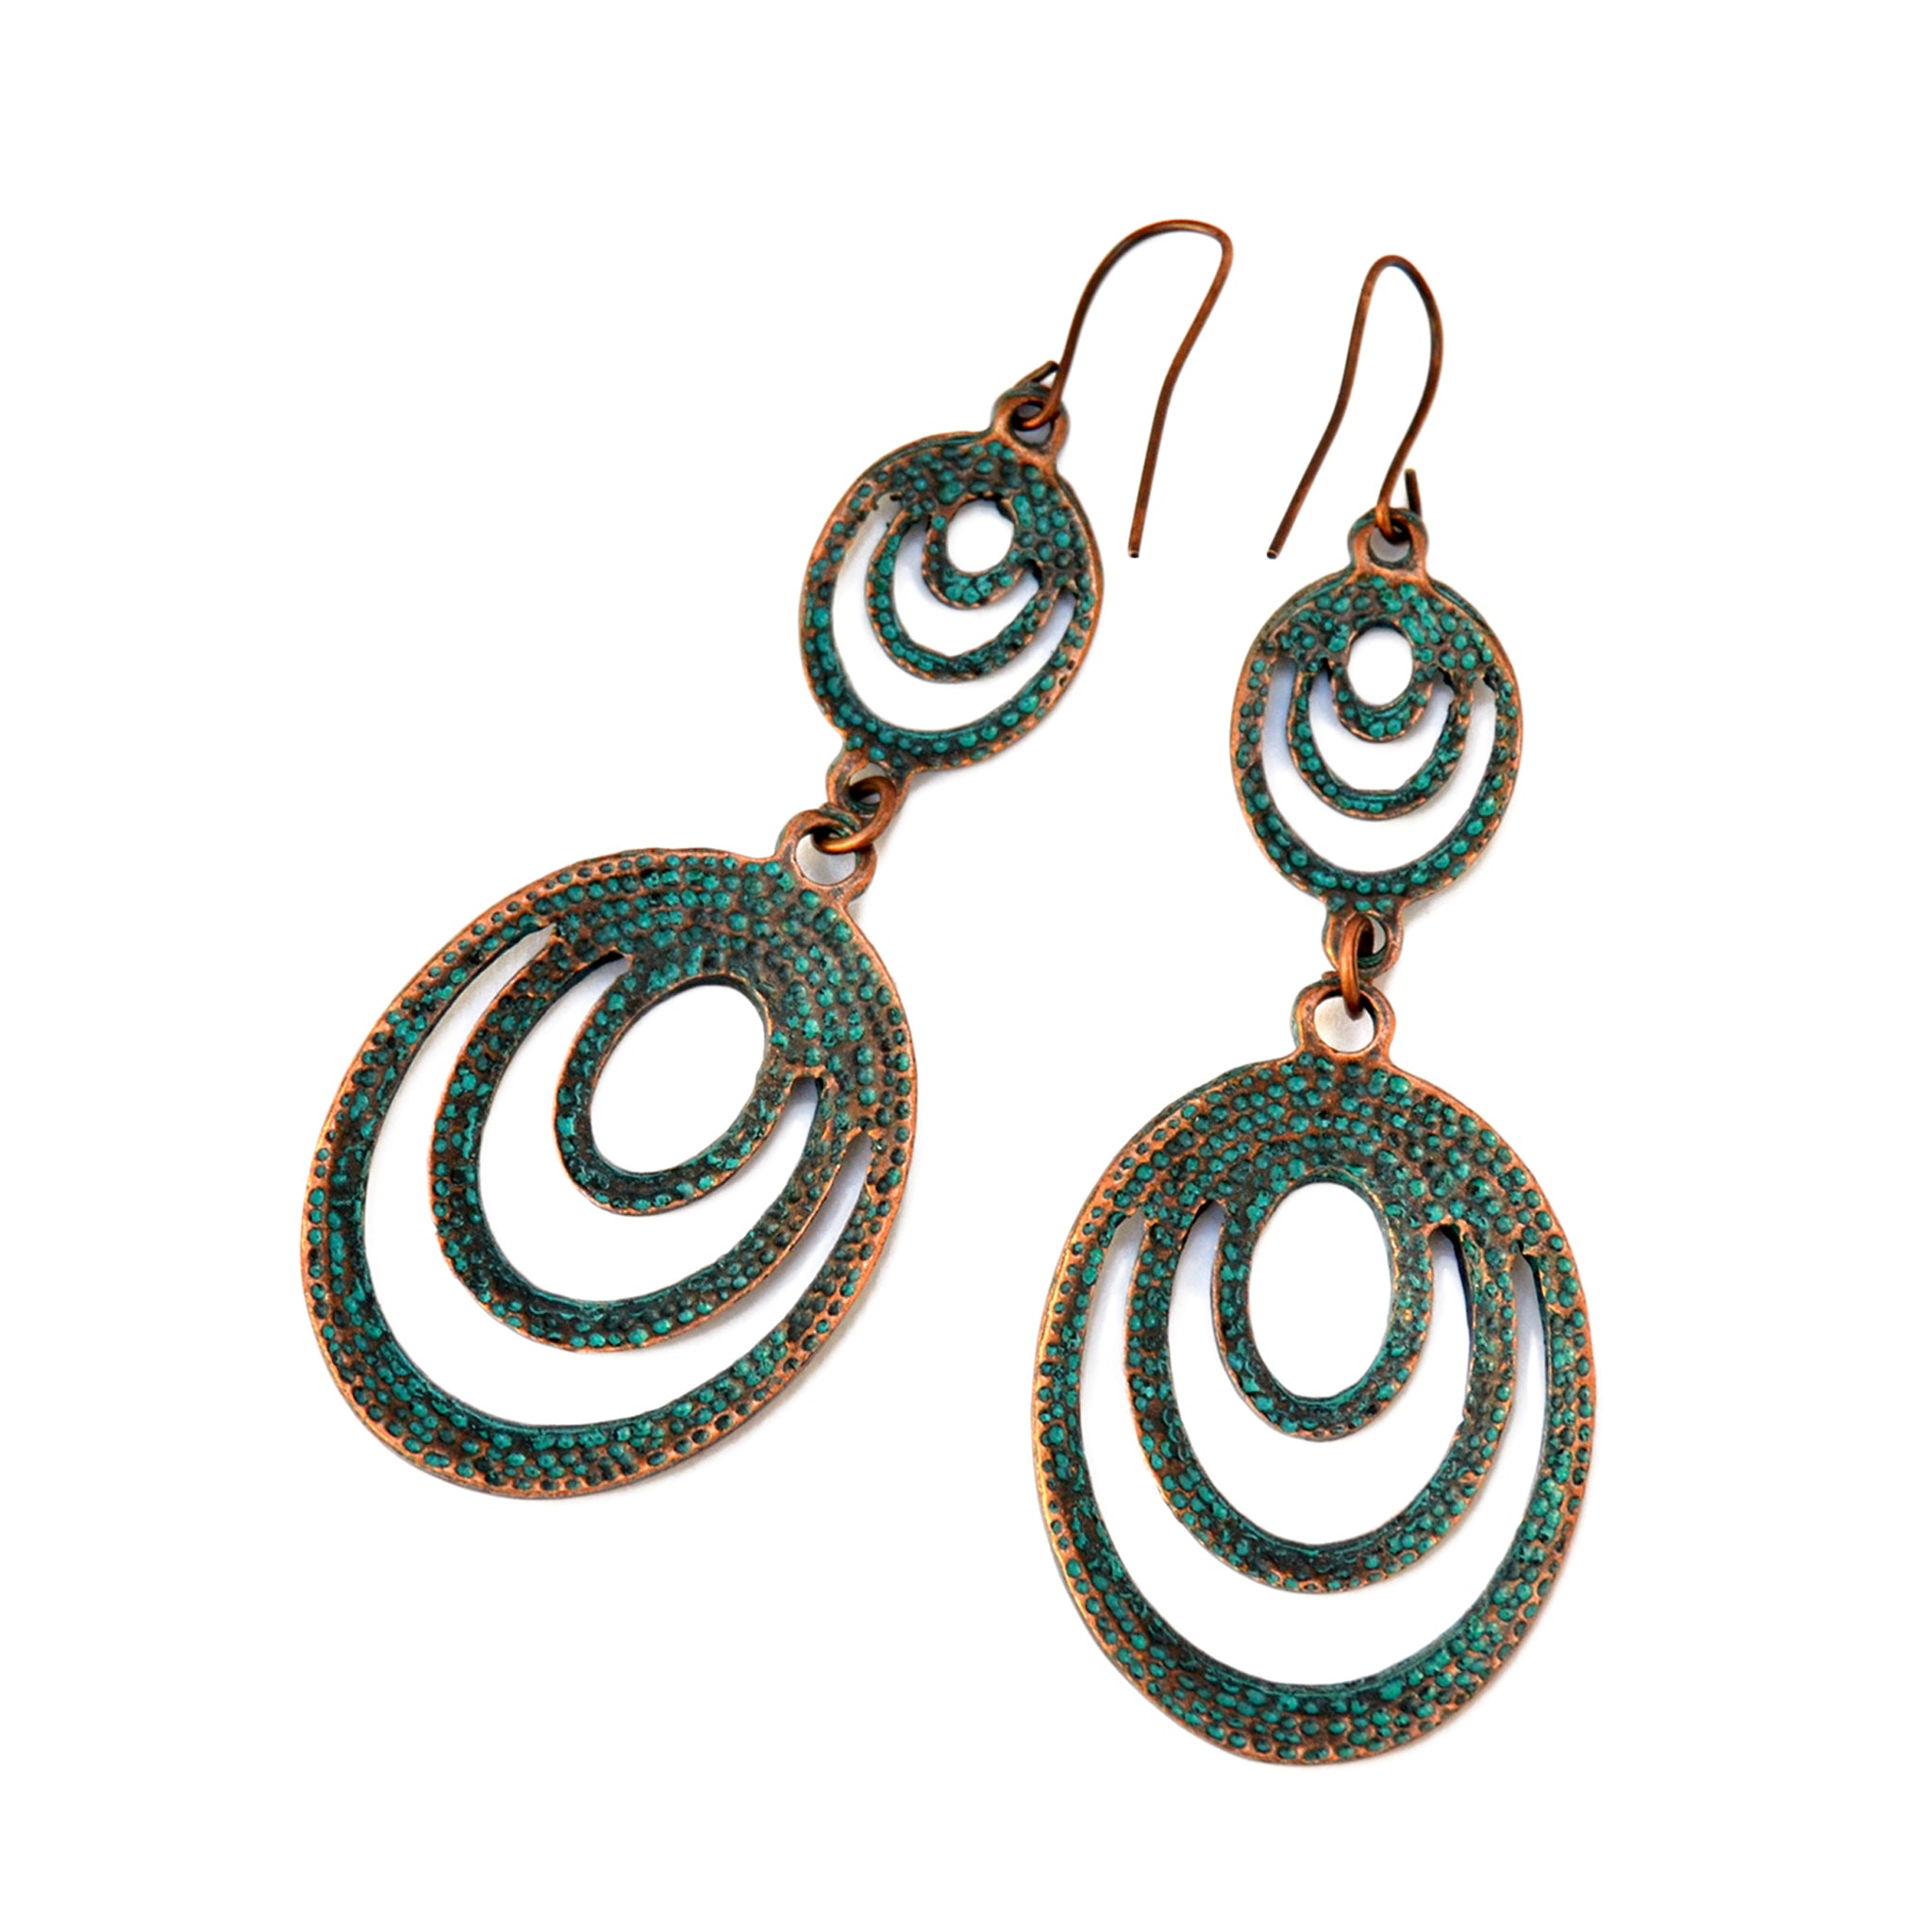 Verdigris patina oval earrings